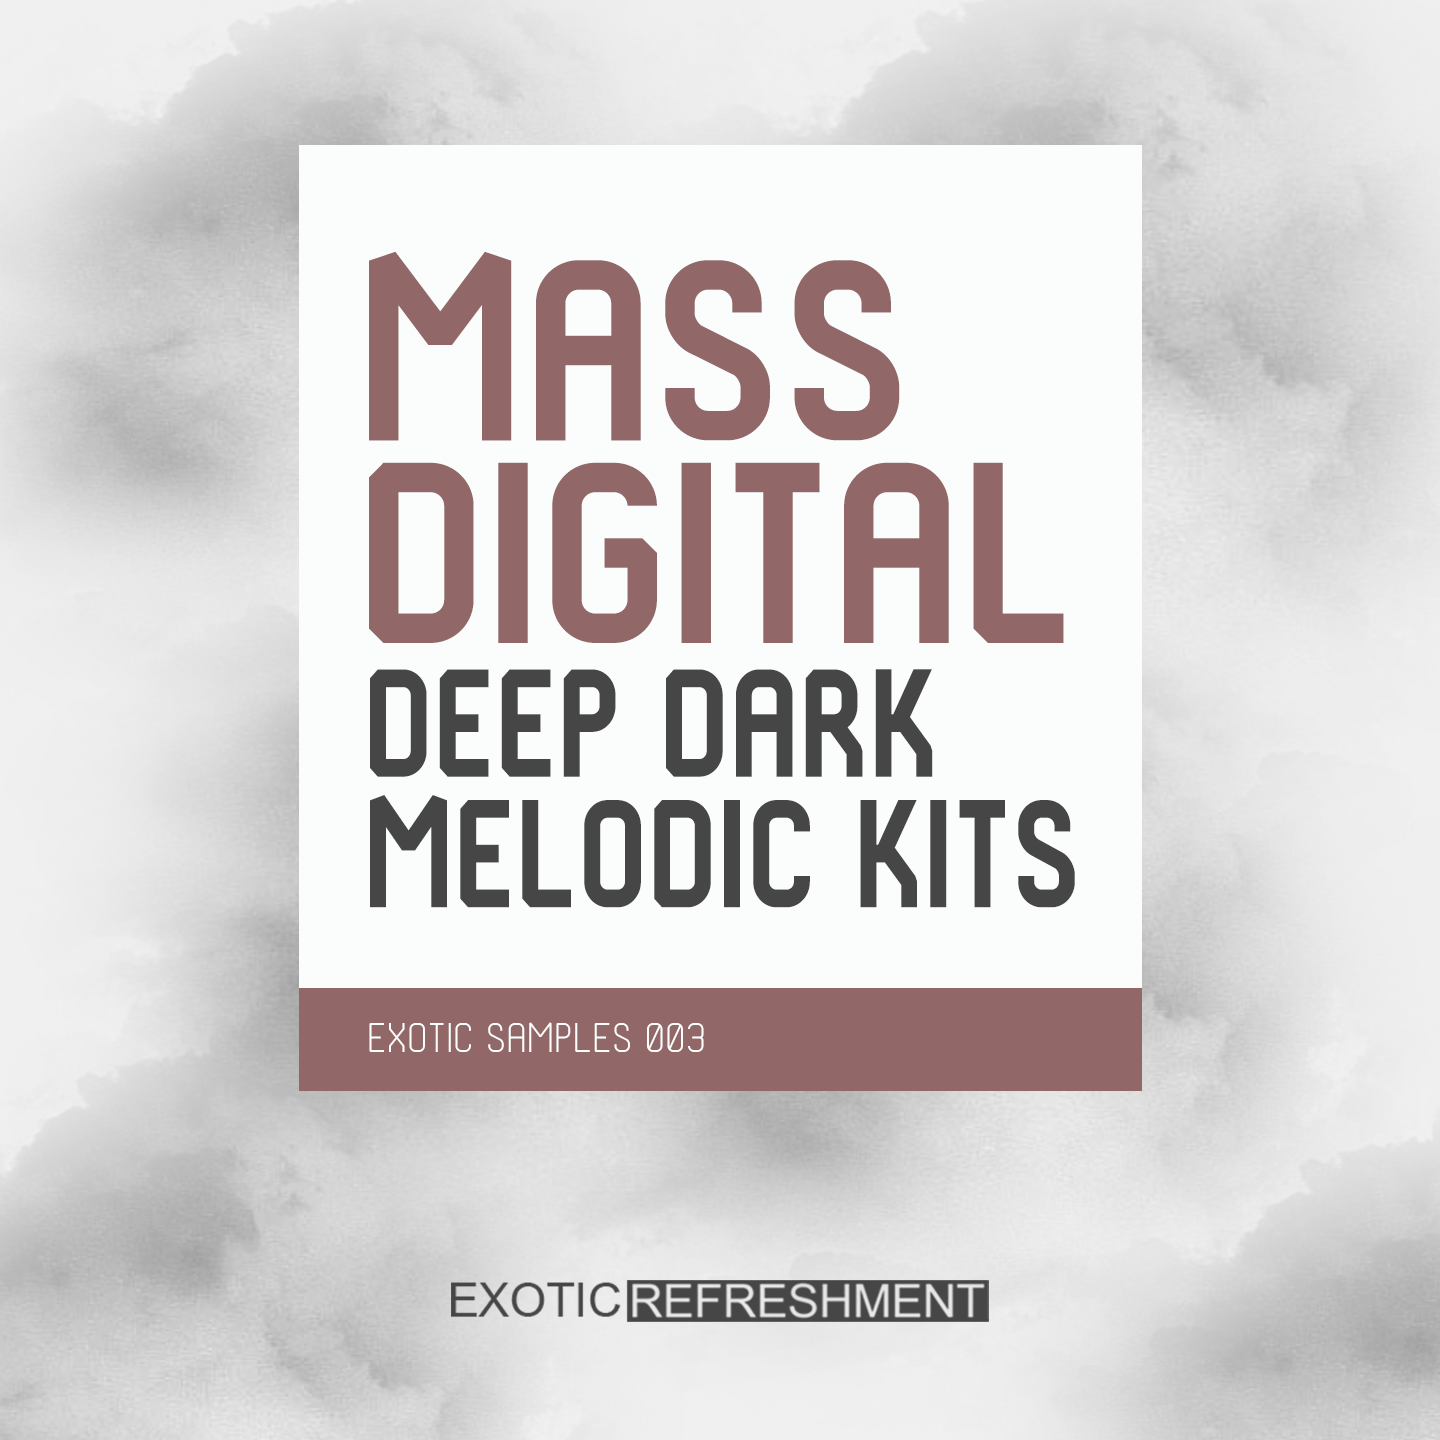 Mass Digital Deep Dark Melodic Kits - Exotic Samples 003